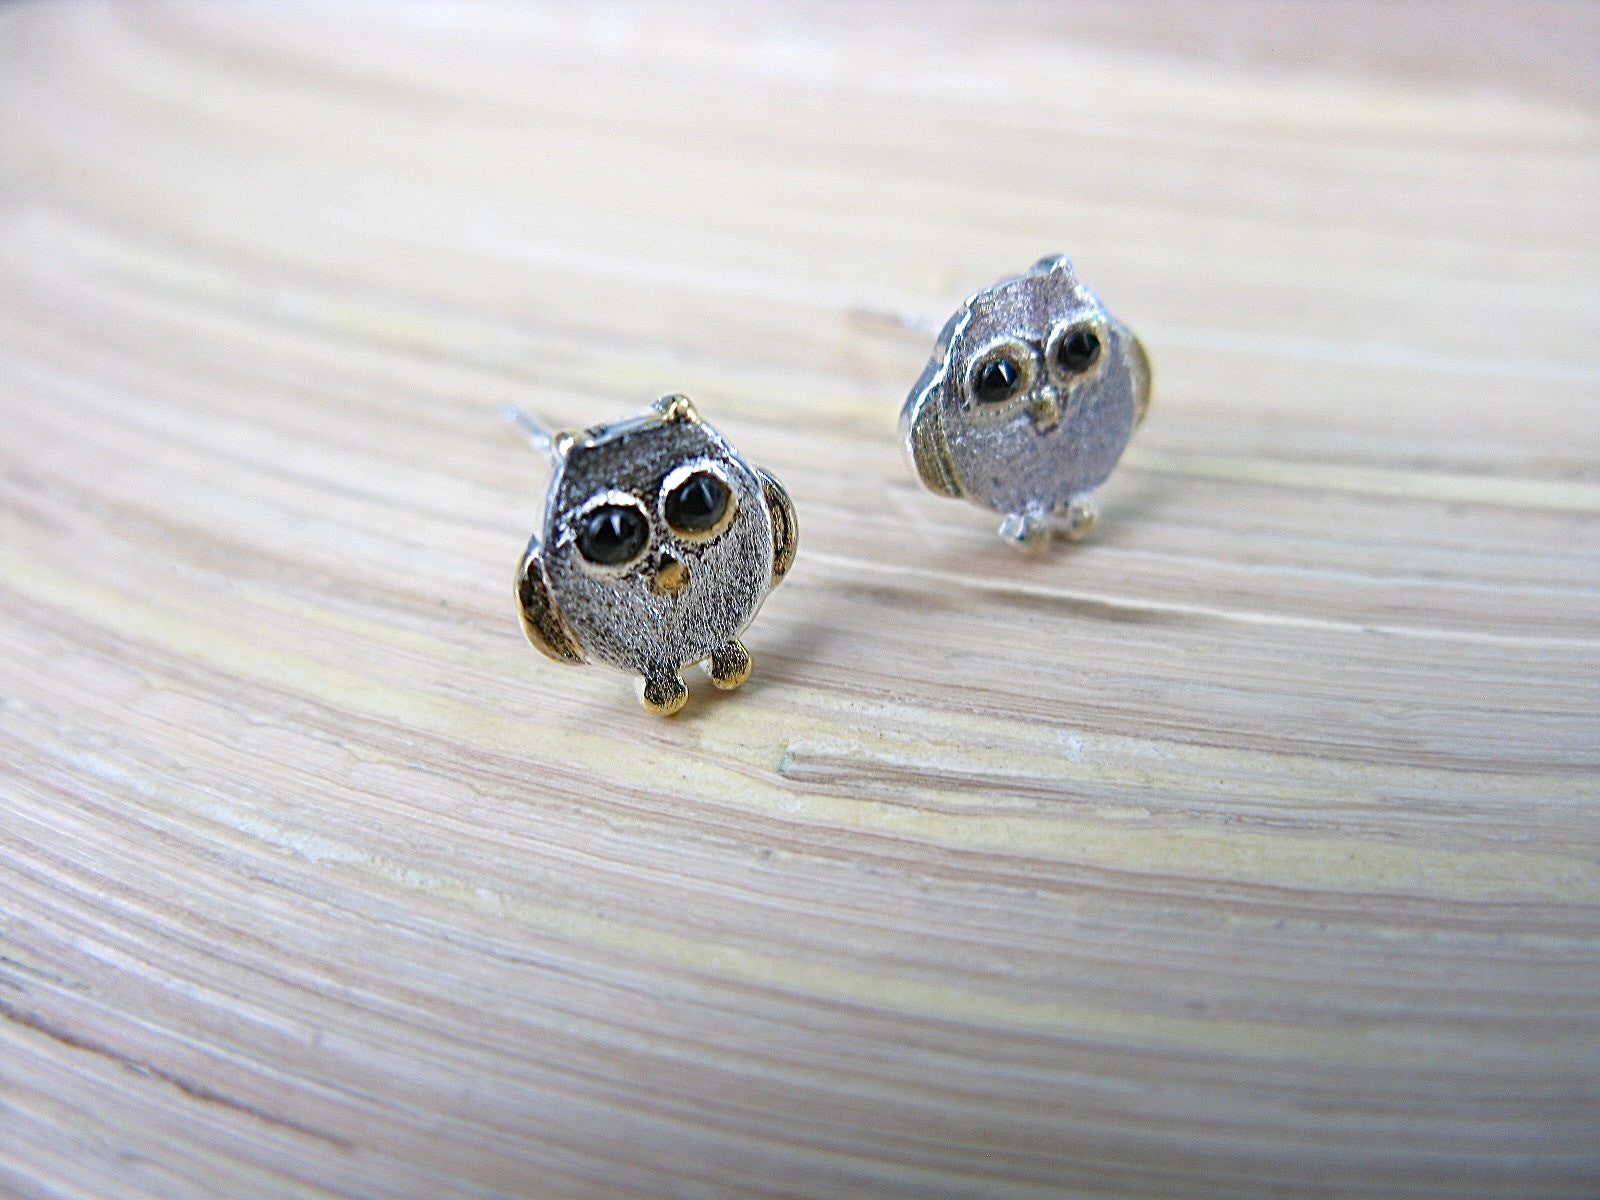 Owl Two Tone Gold Plated 925 Sterling Silver Stud Earrings Stud Faith Owl - Faith Owl